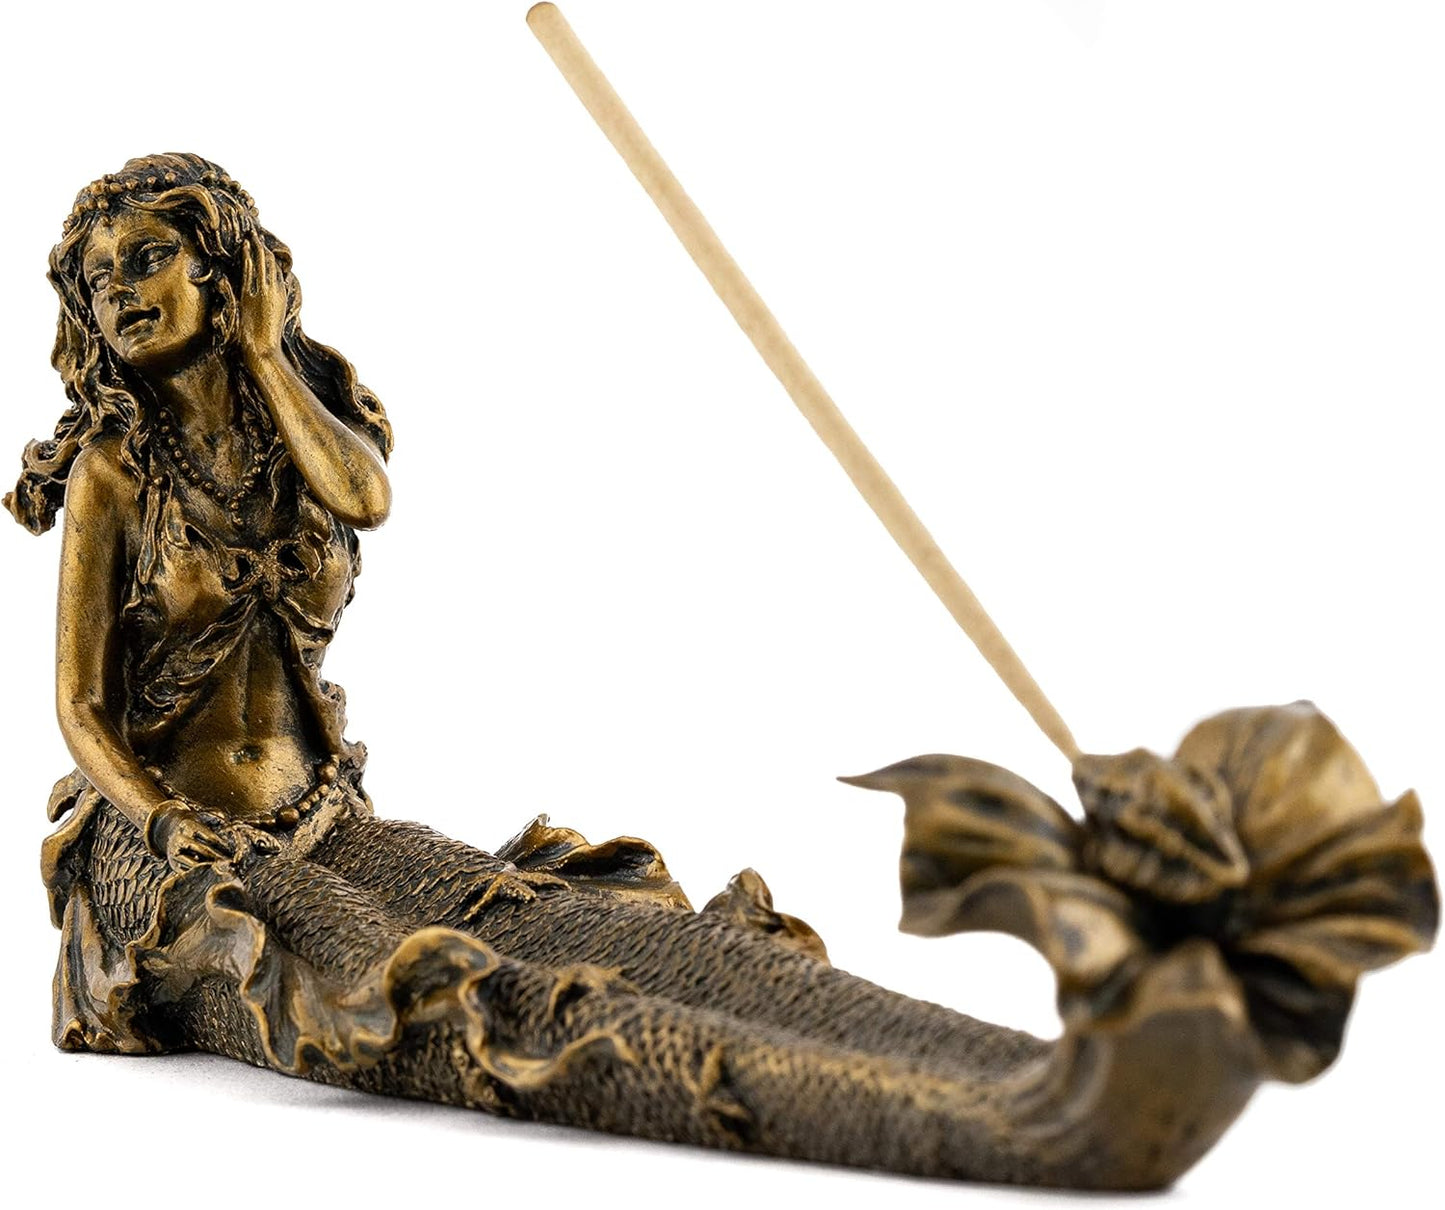 The Mermaid Princess Cold-Cast Bronze 9" Incense Burner